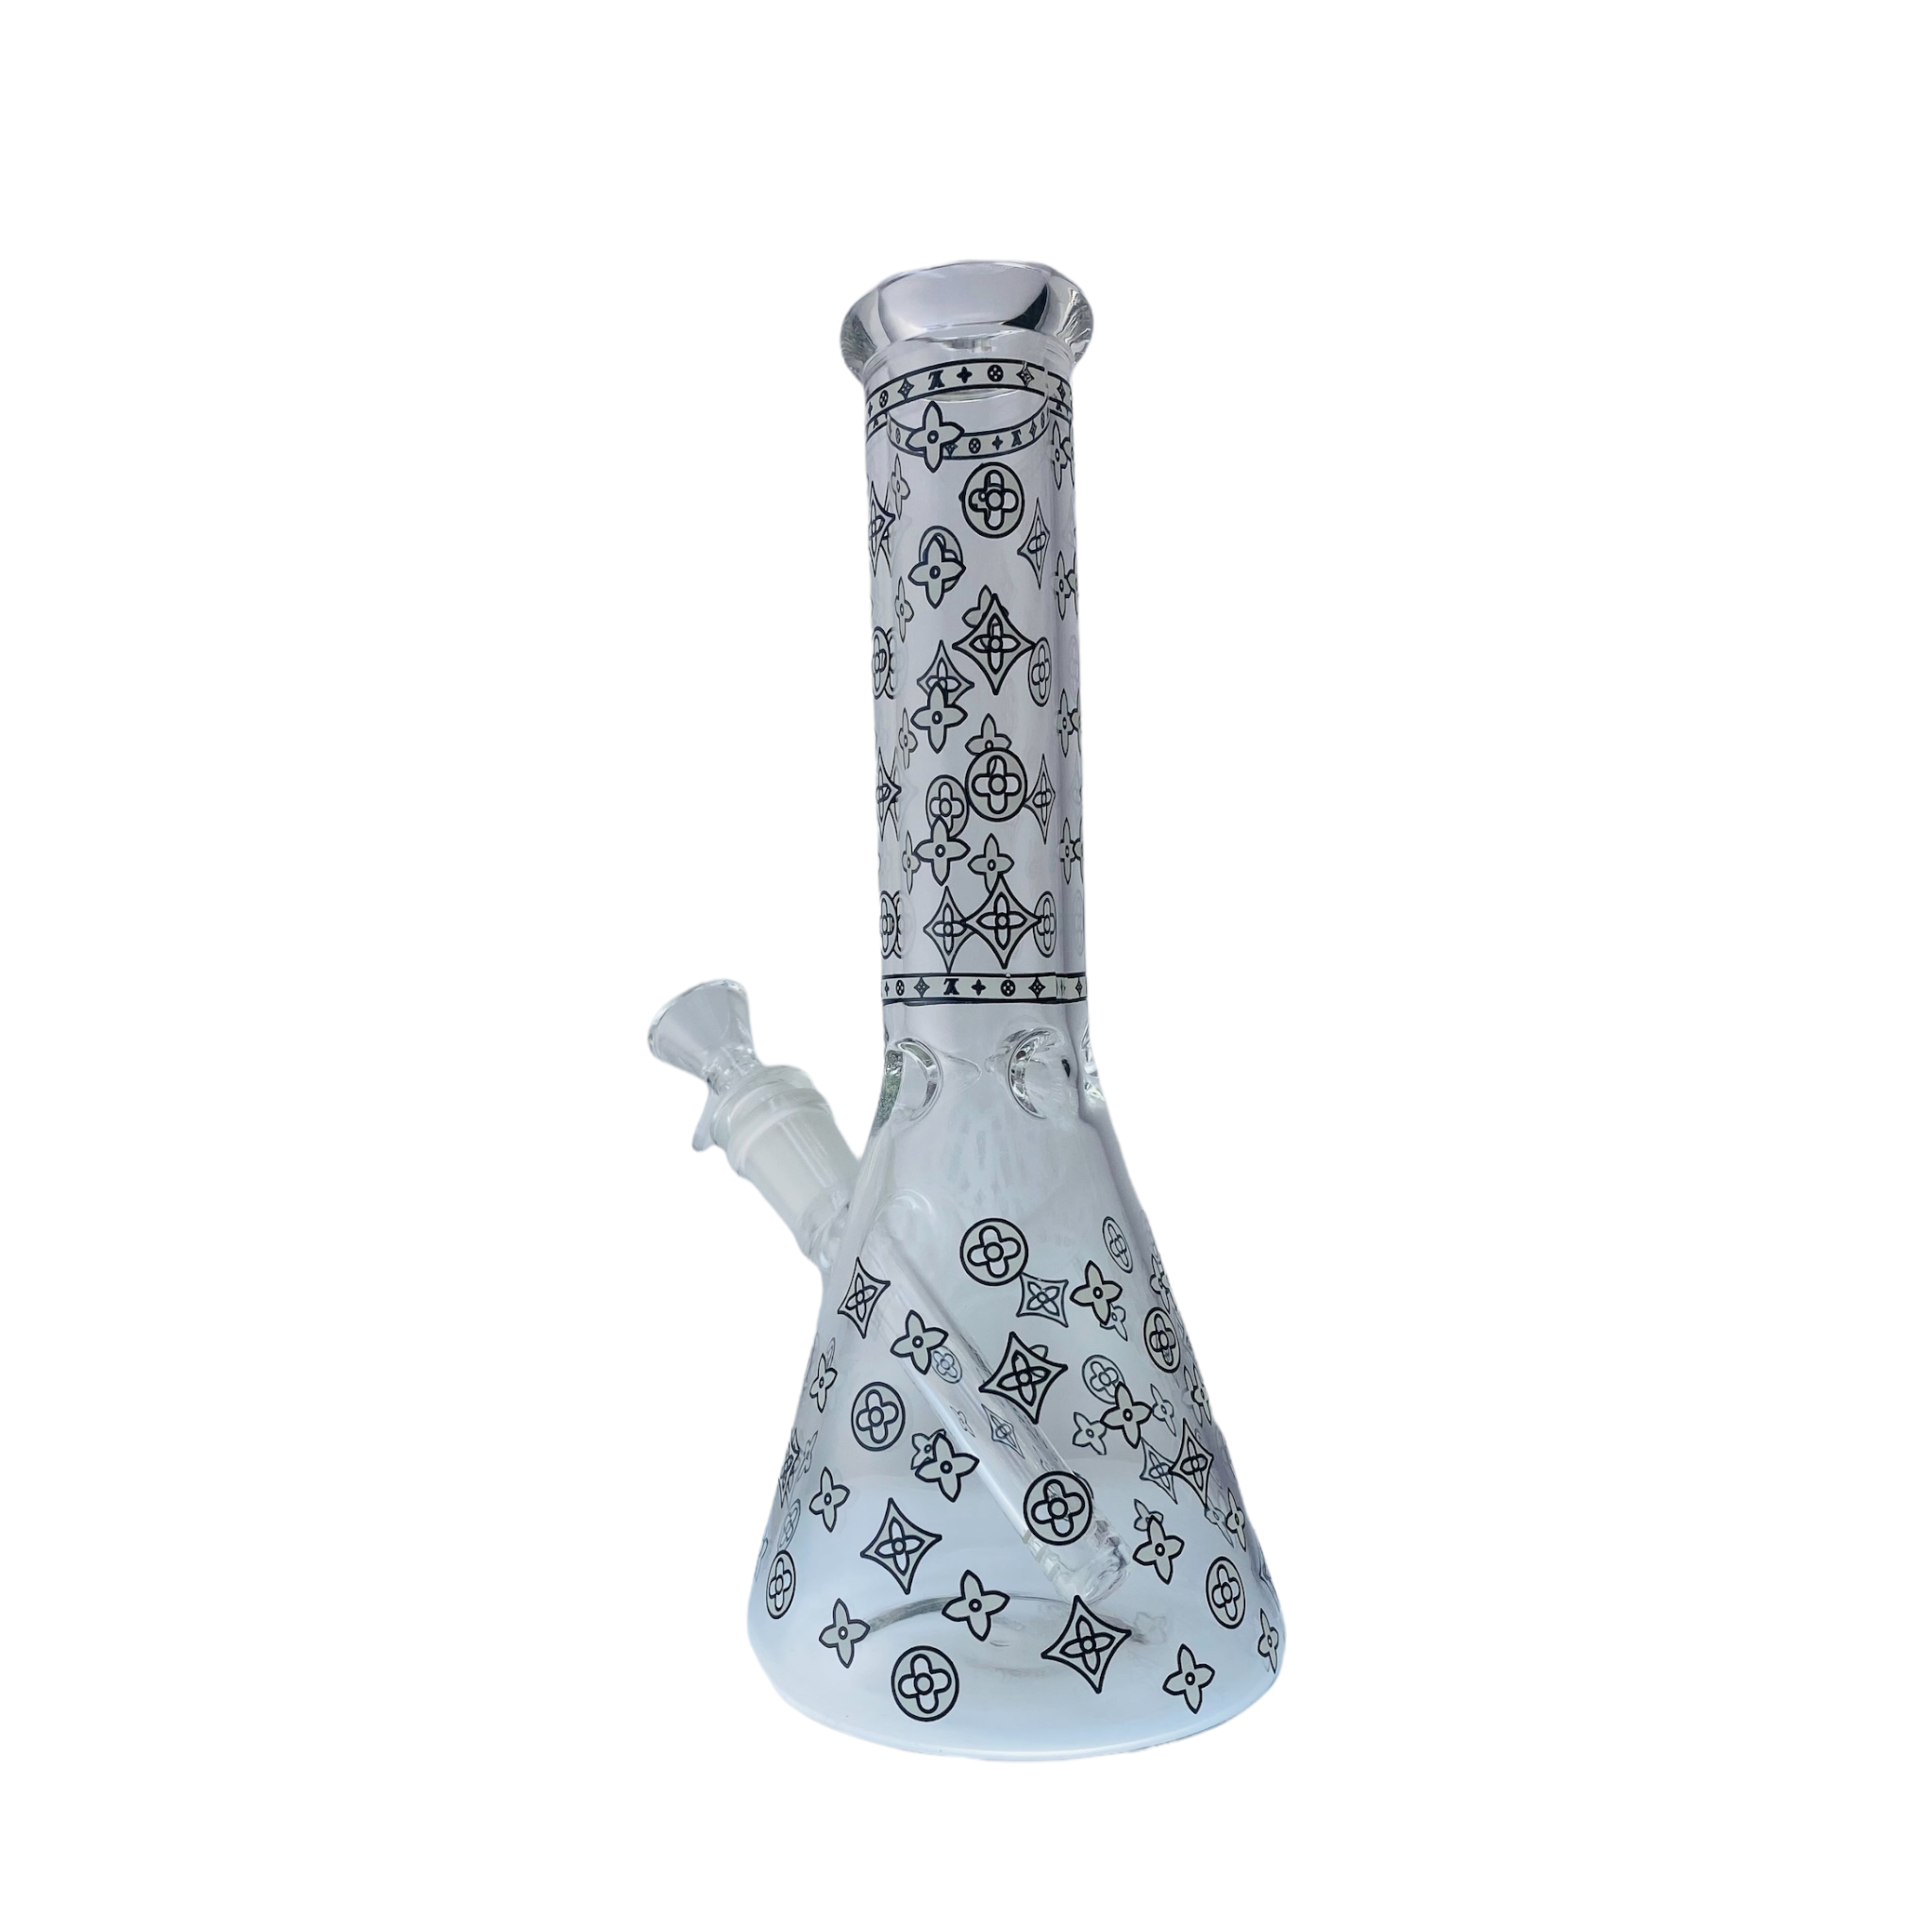 diamond Beaker Bong Water Pipe With Decorative Symbols